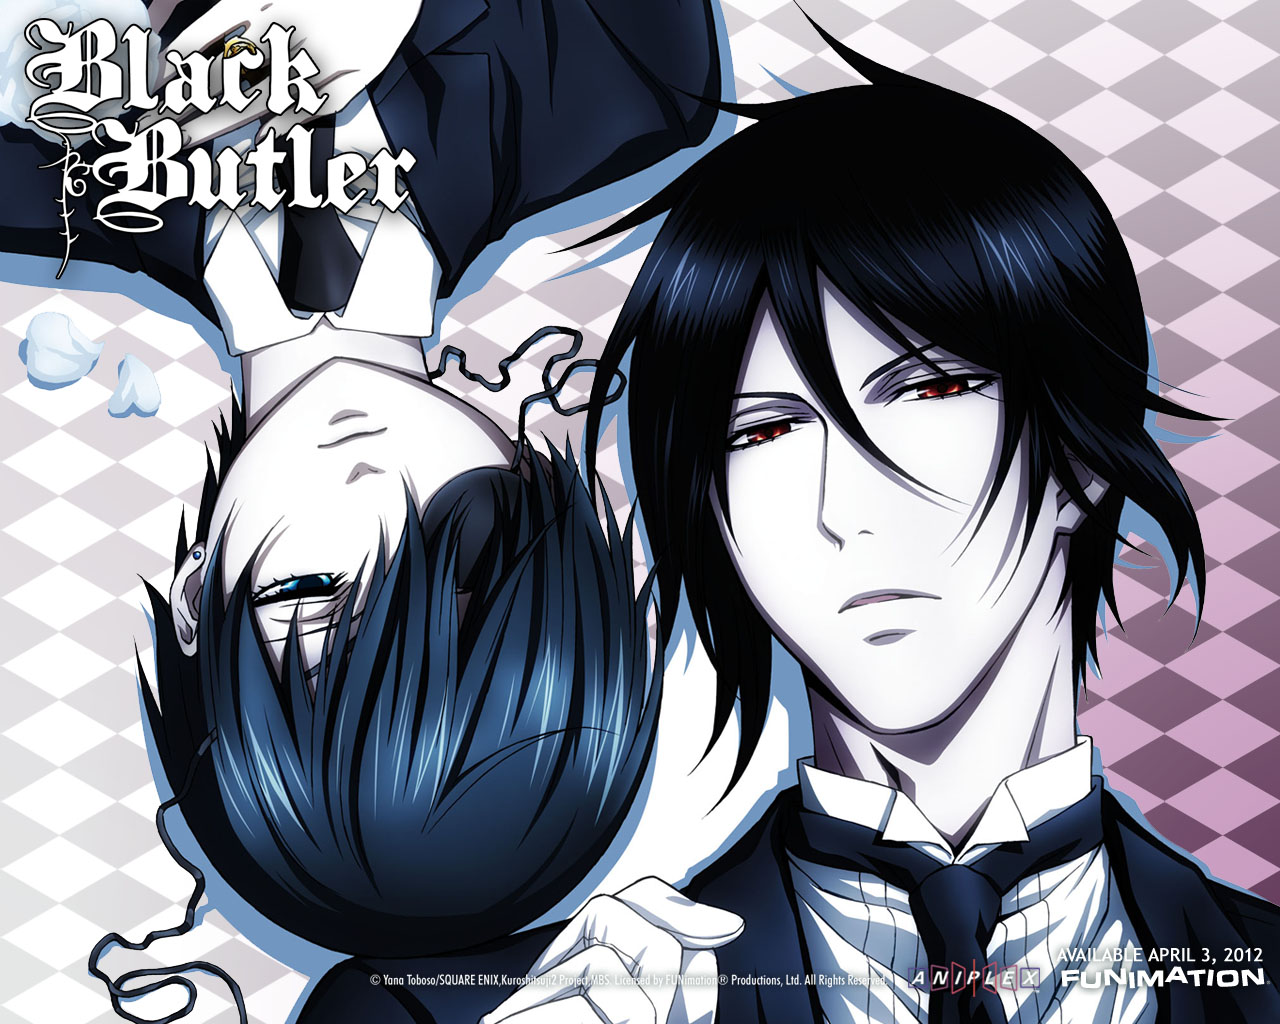 Black Butler Official Sebastian And Ciel Wallpaper It S The Gift